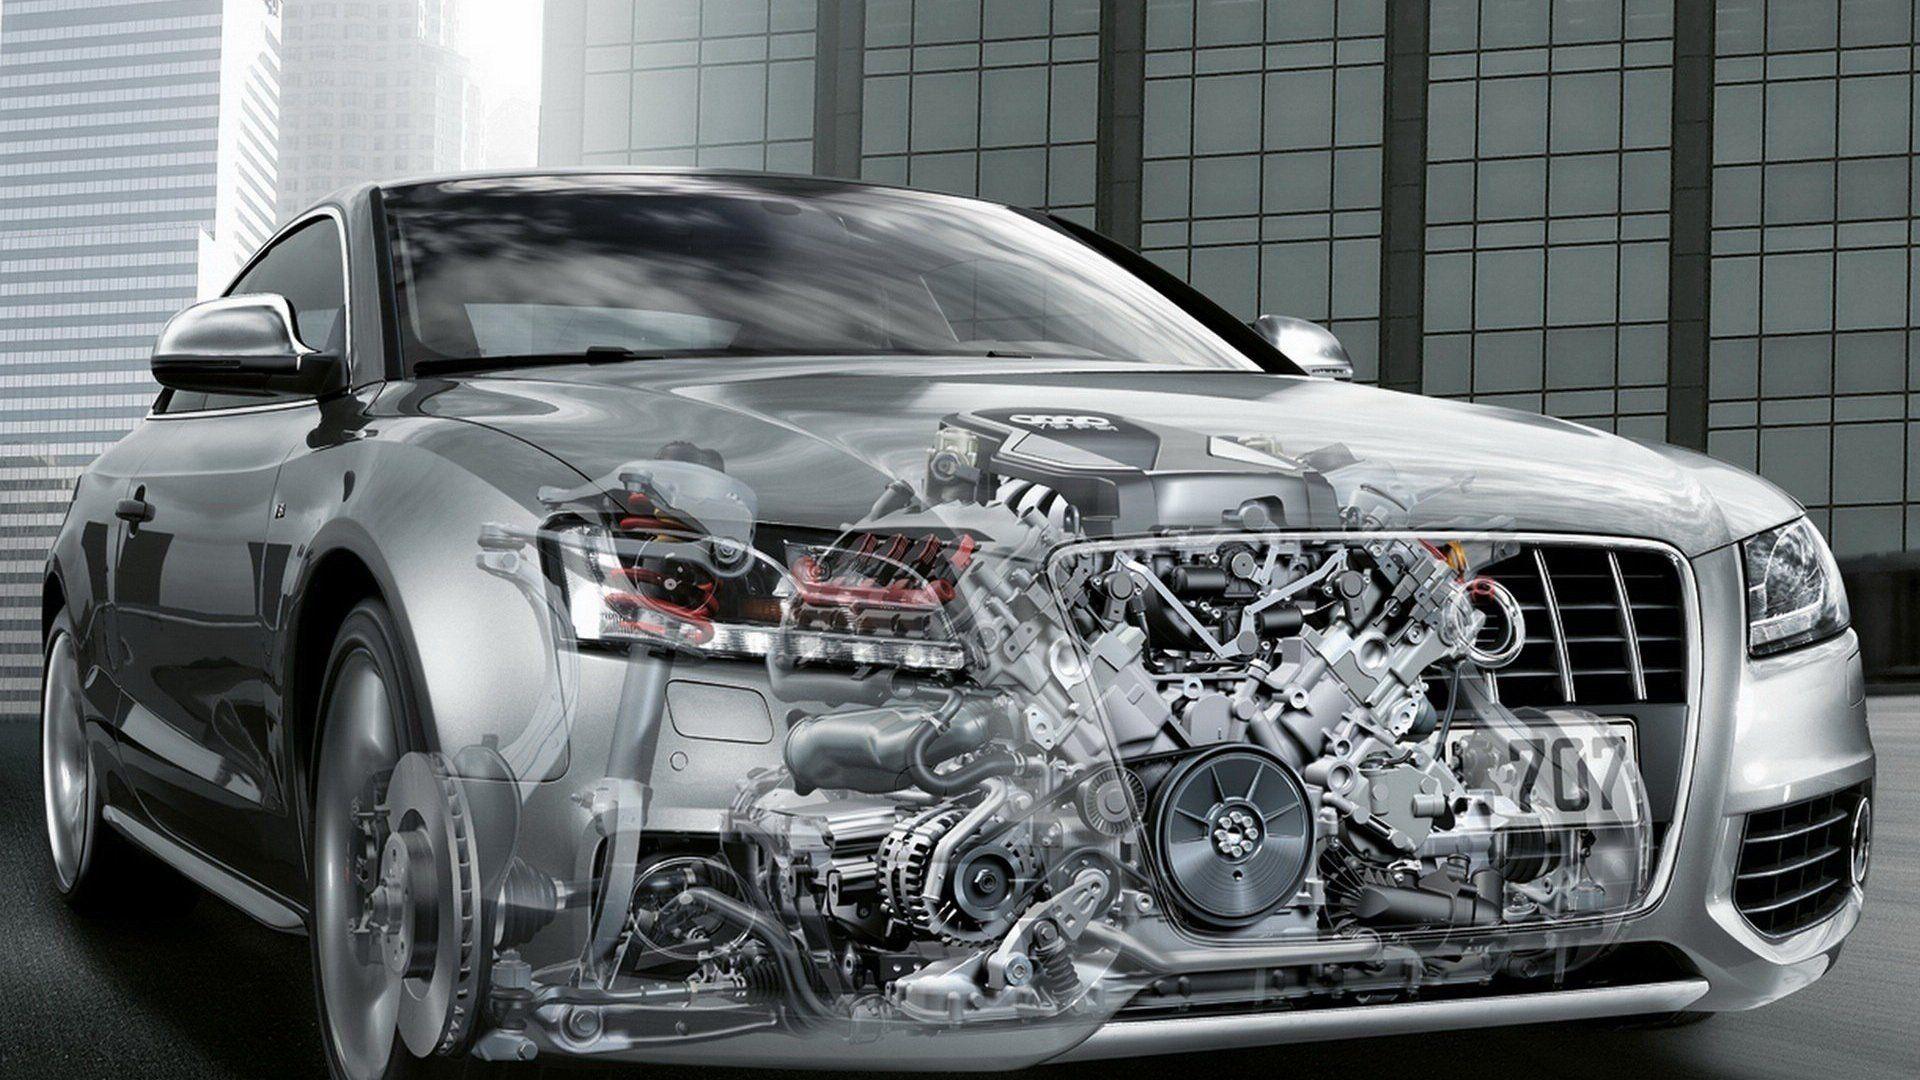 HD Engine Wallpaper, Engine Background. Car engine, Audi cars, Car